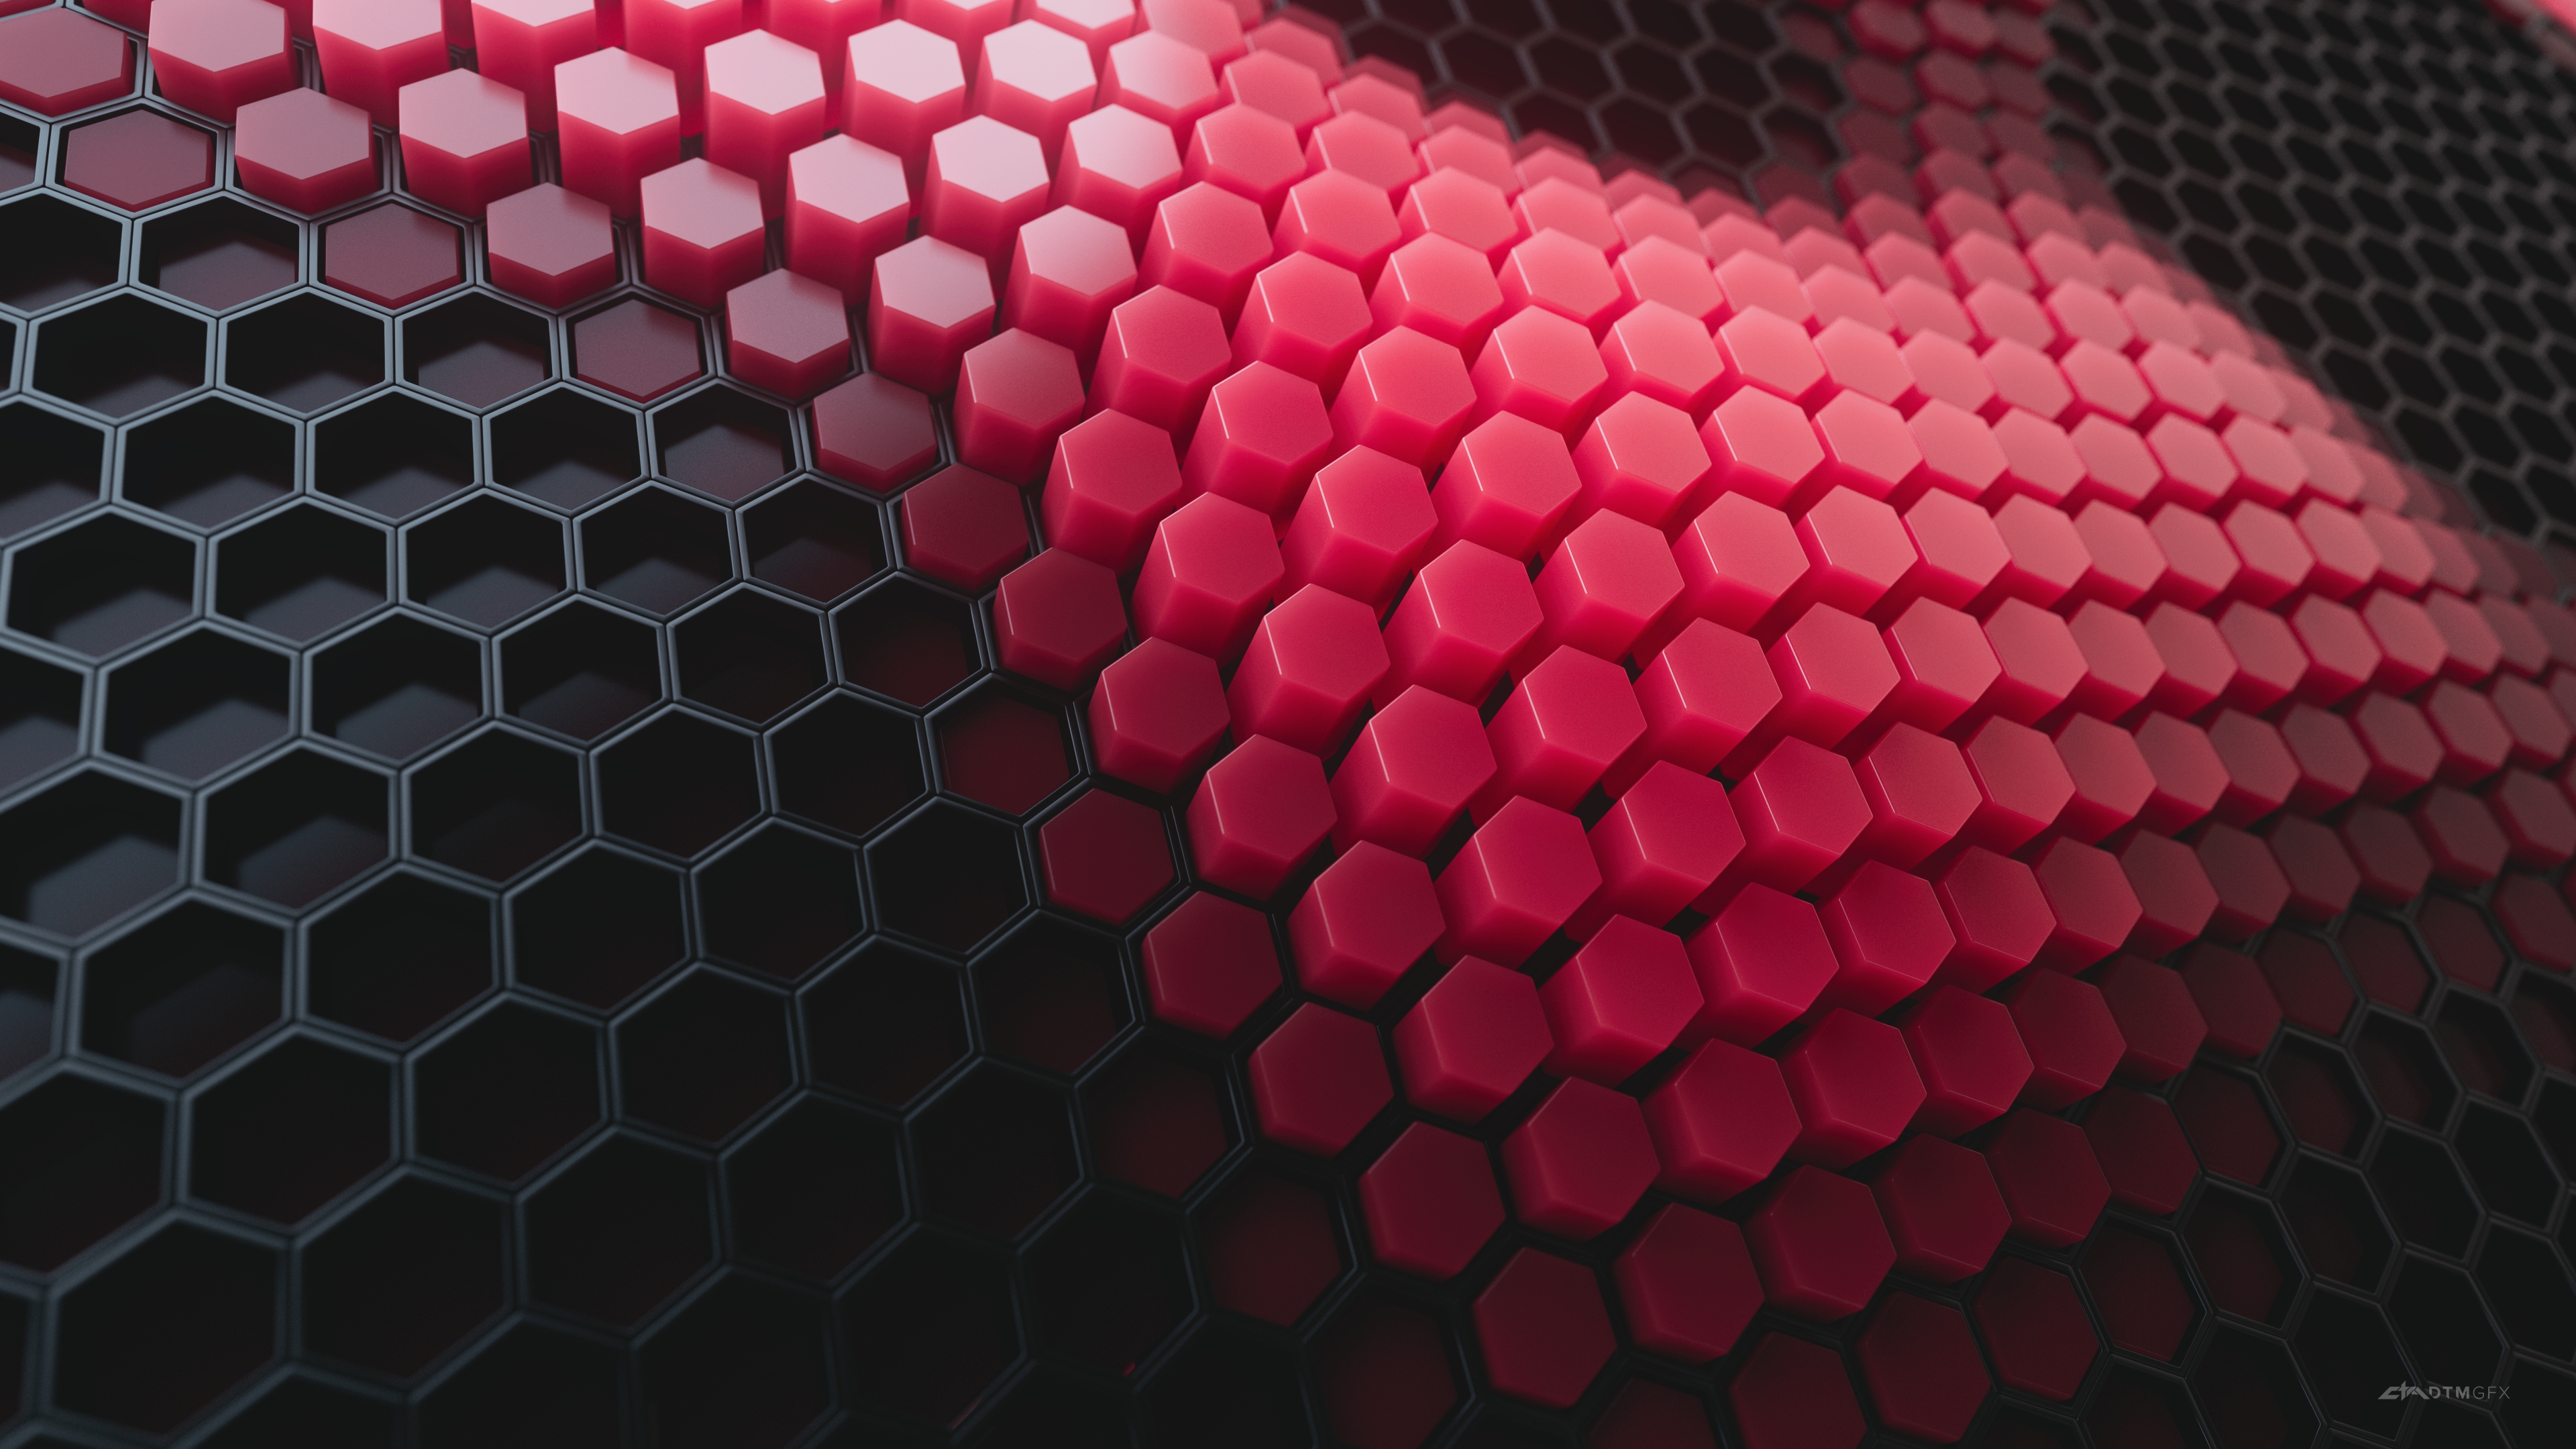 HD wallpaper, Red Background, Patterns, Black Blocks, Red Blocks, Hexagons, Geometric, 3D Background